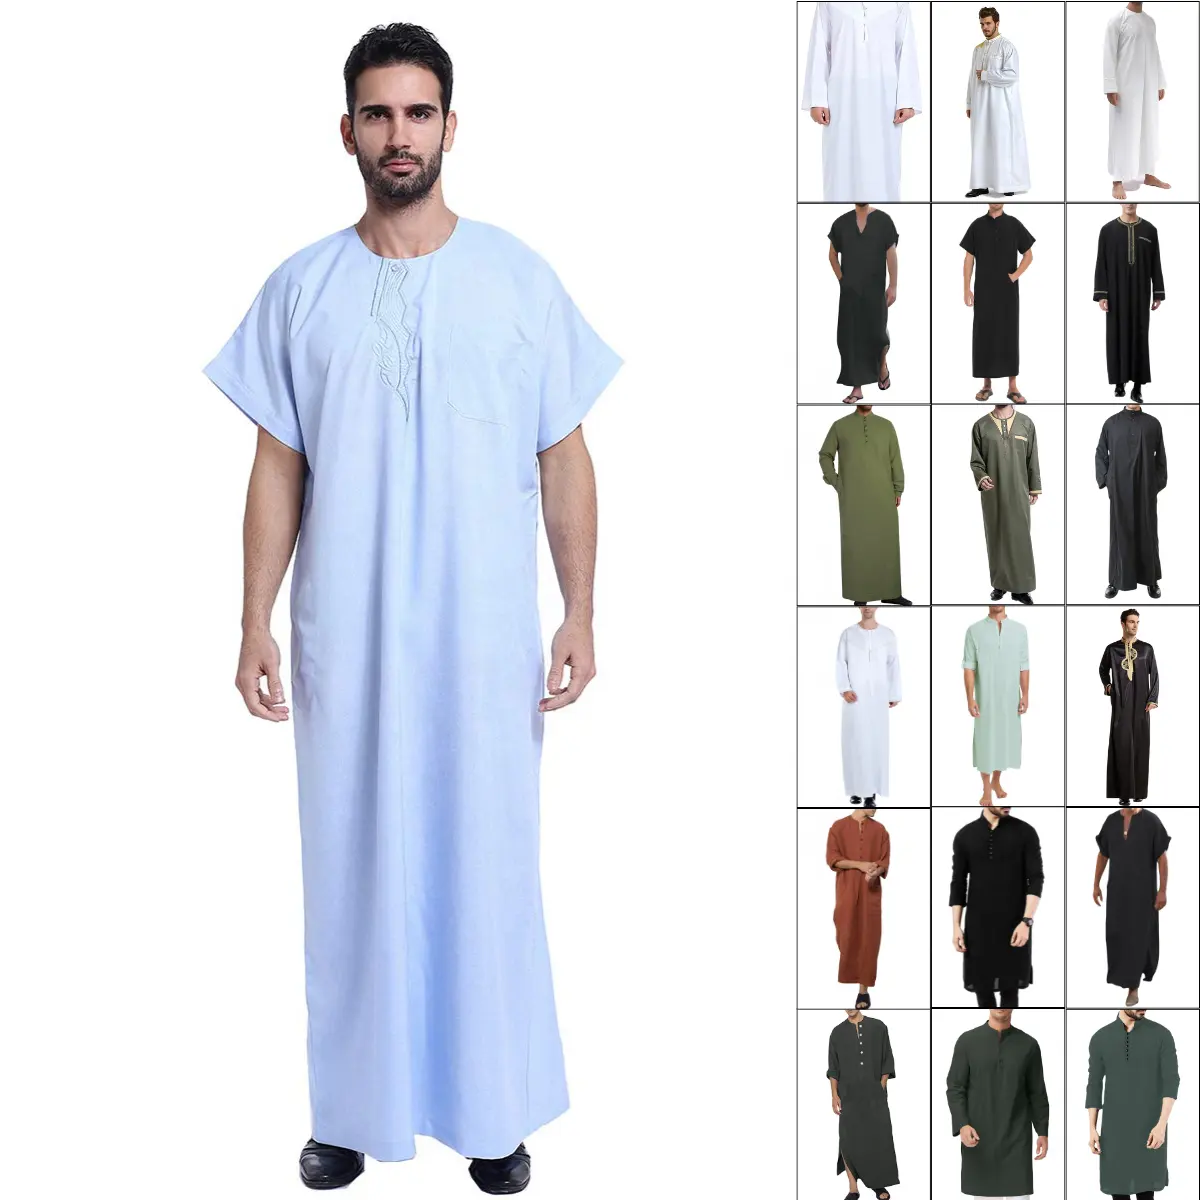 Bata árabe para hombre, marca Khal, manga larga, Material de poliéster, Thobe blanco con pantalones para musulmanes